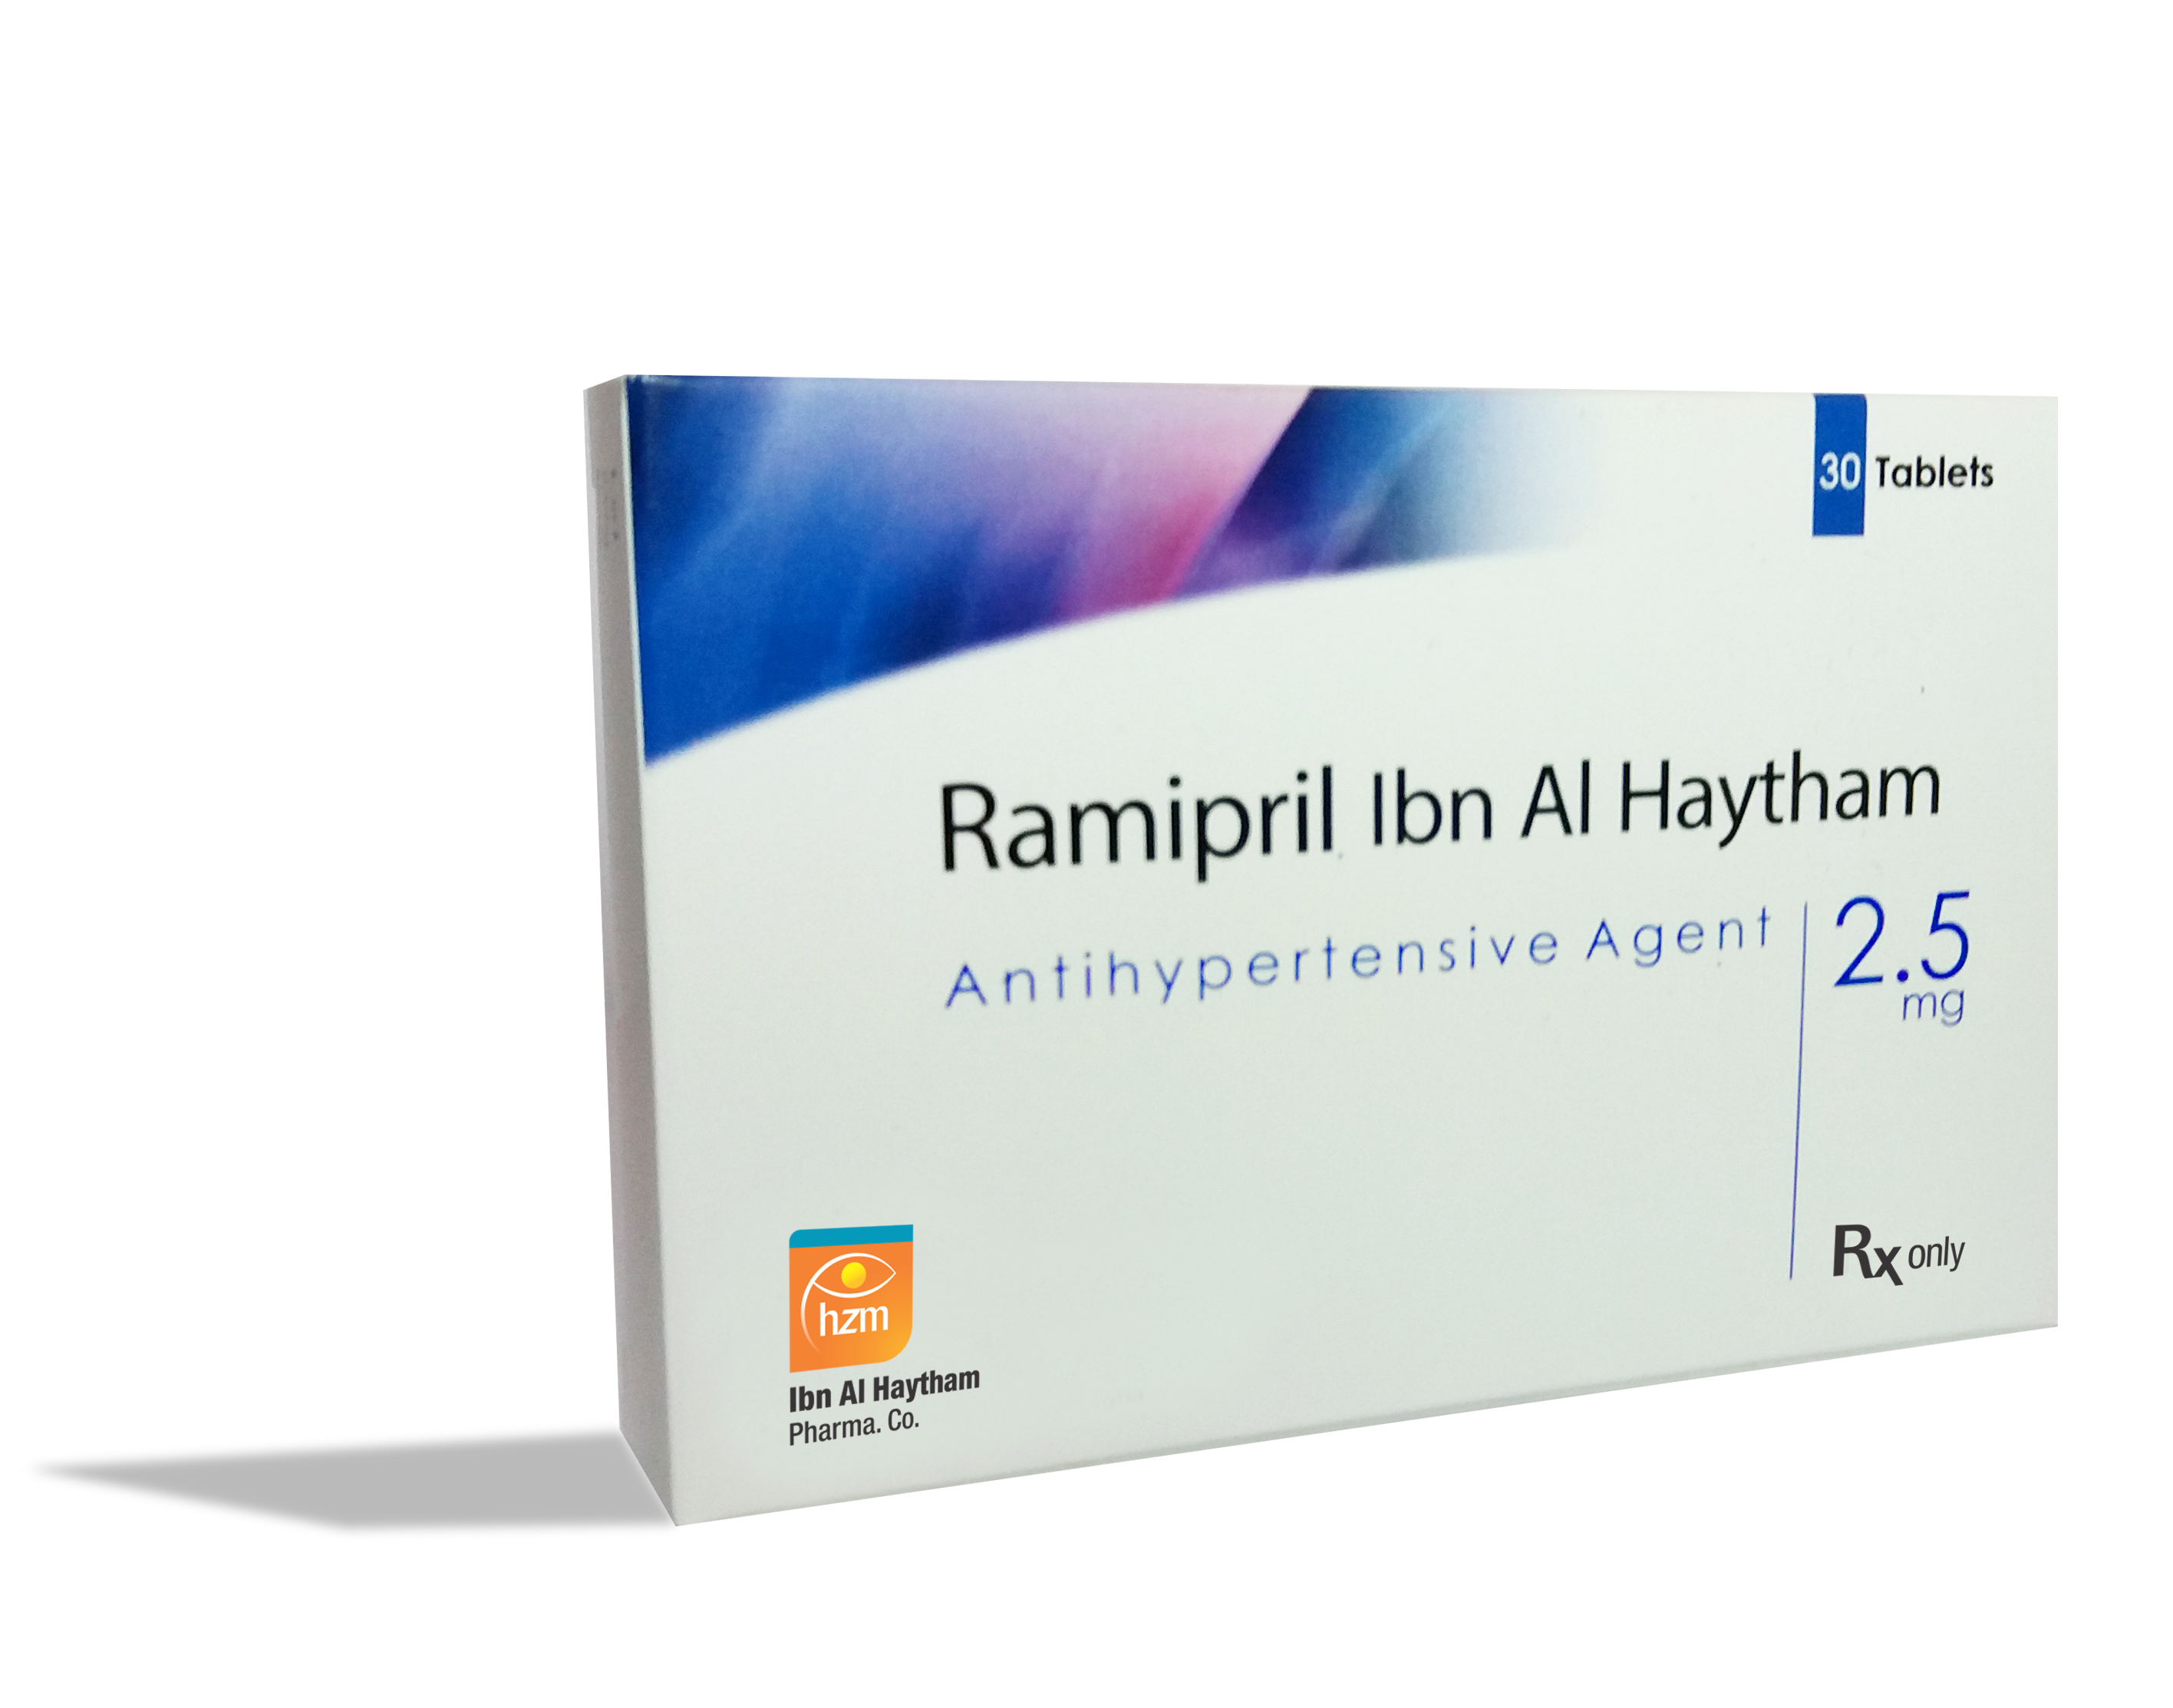 Ramipril Ibn Al Haytham 2.5 mg 